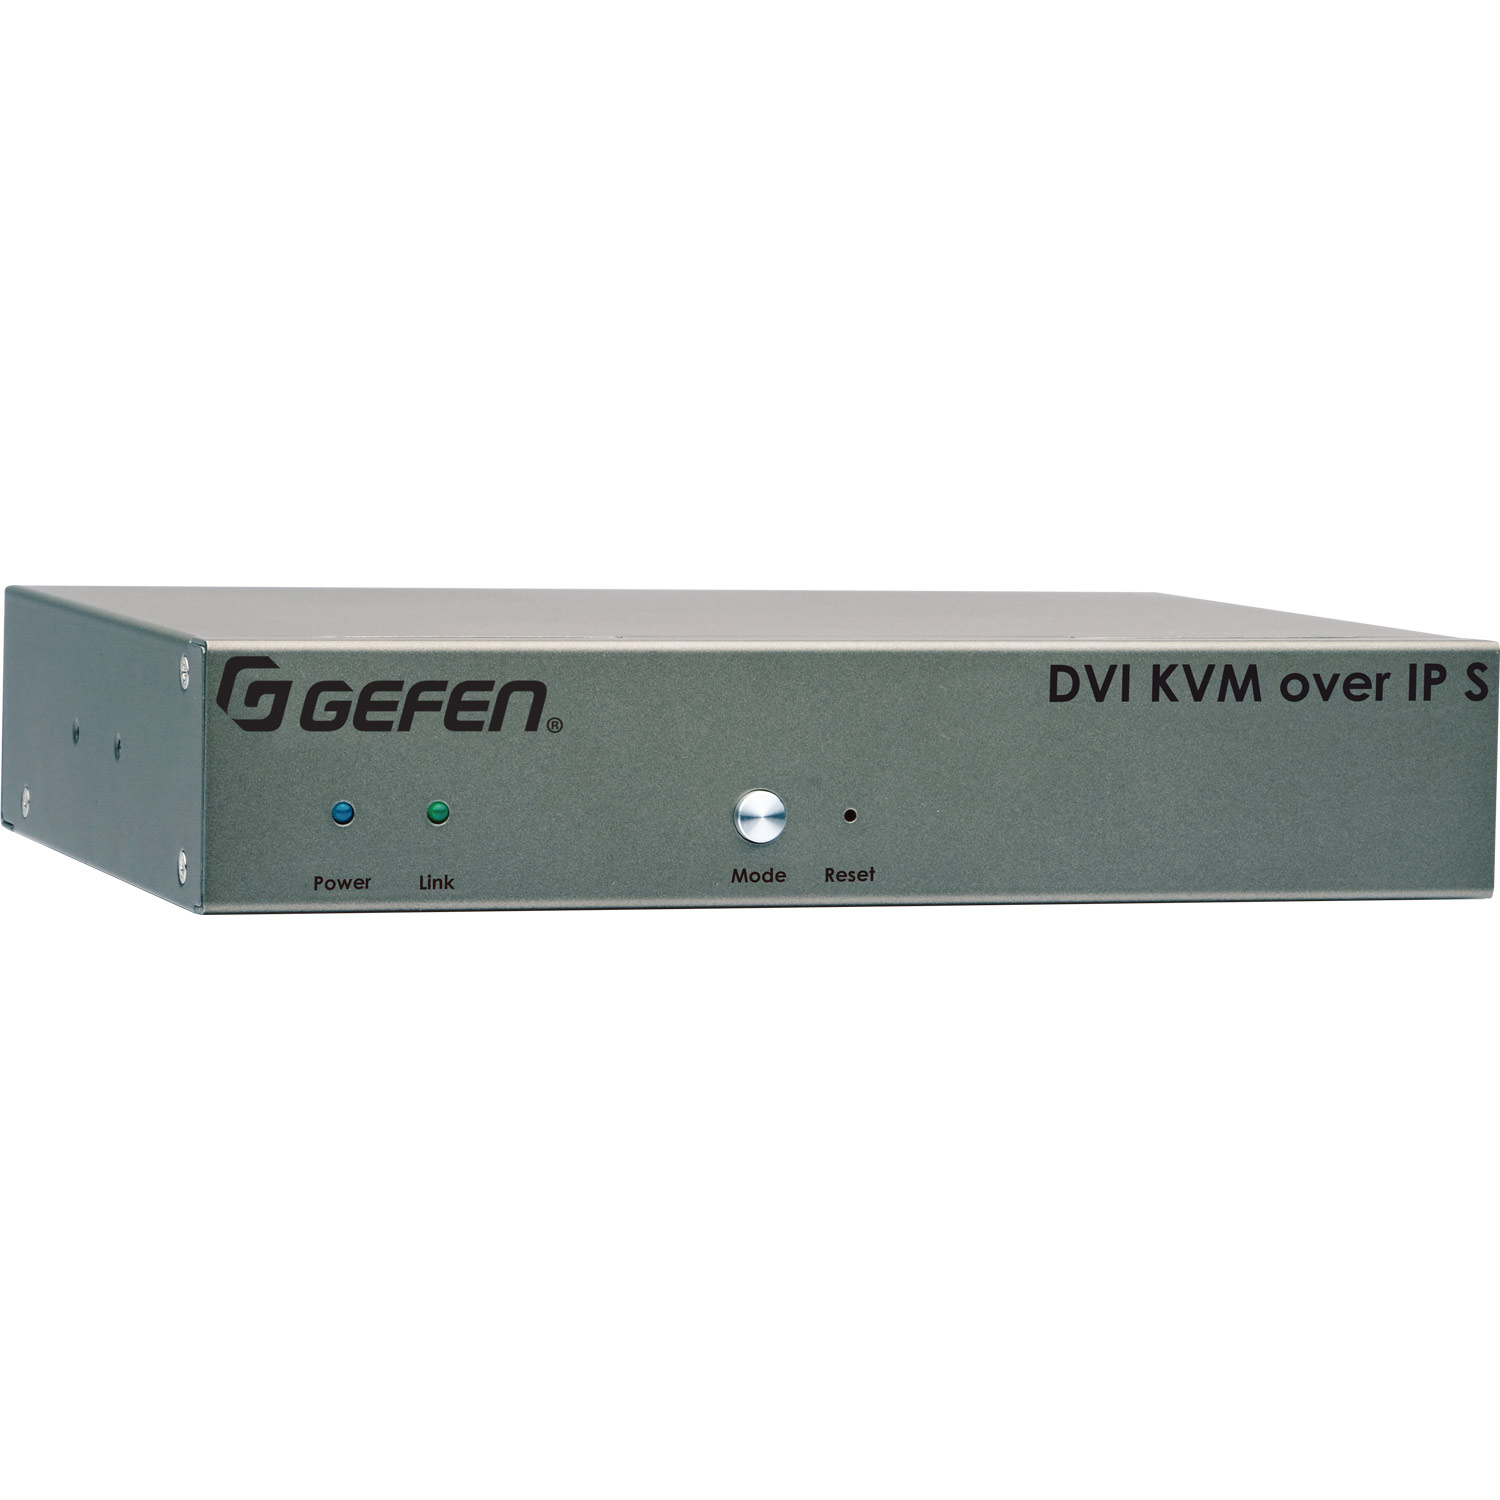 DVI KVM over IP w/ Local DVI Output - Sender Unit Package | Gefen